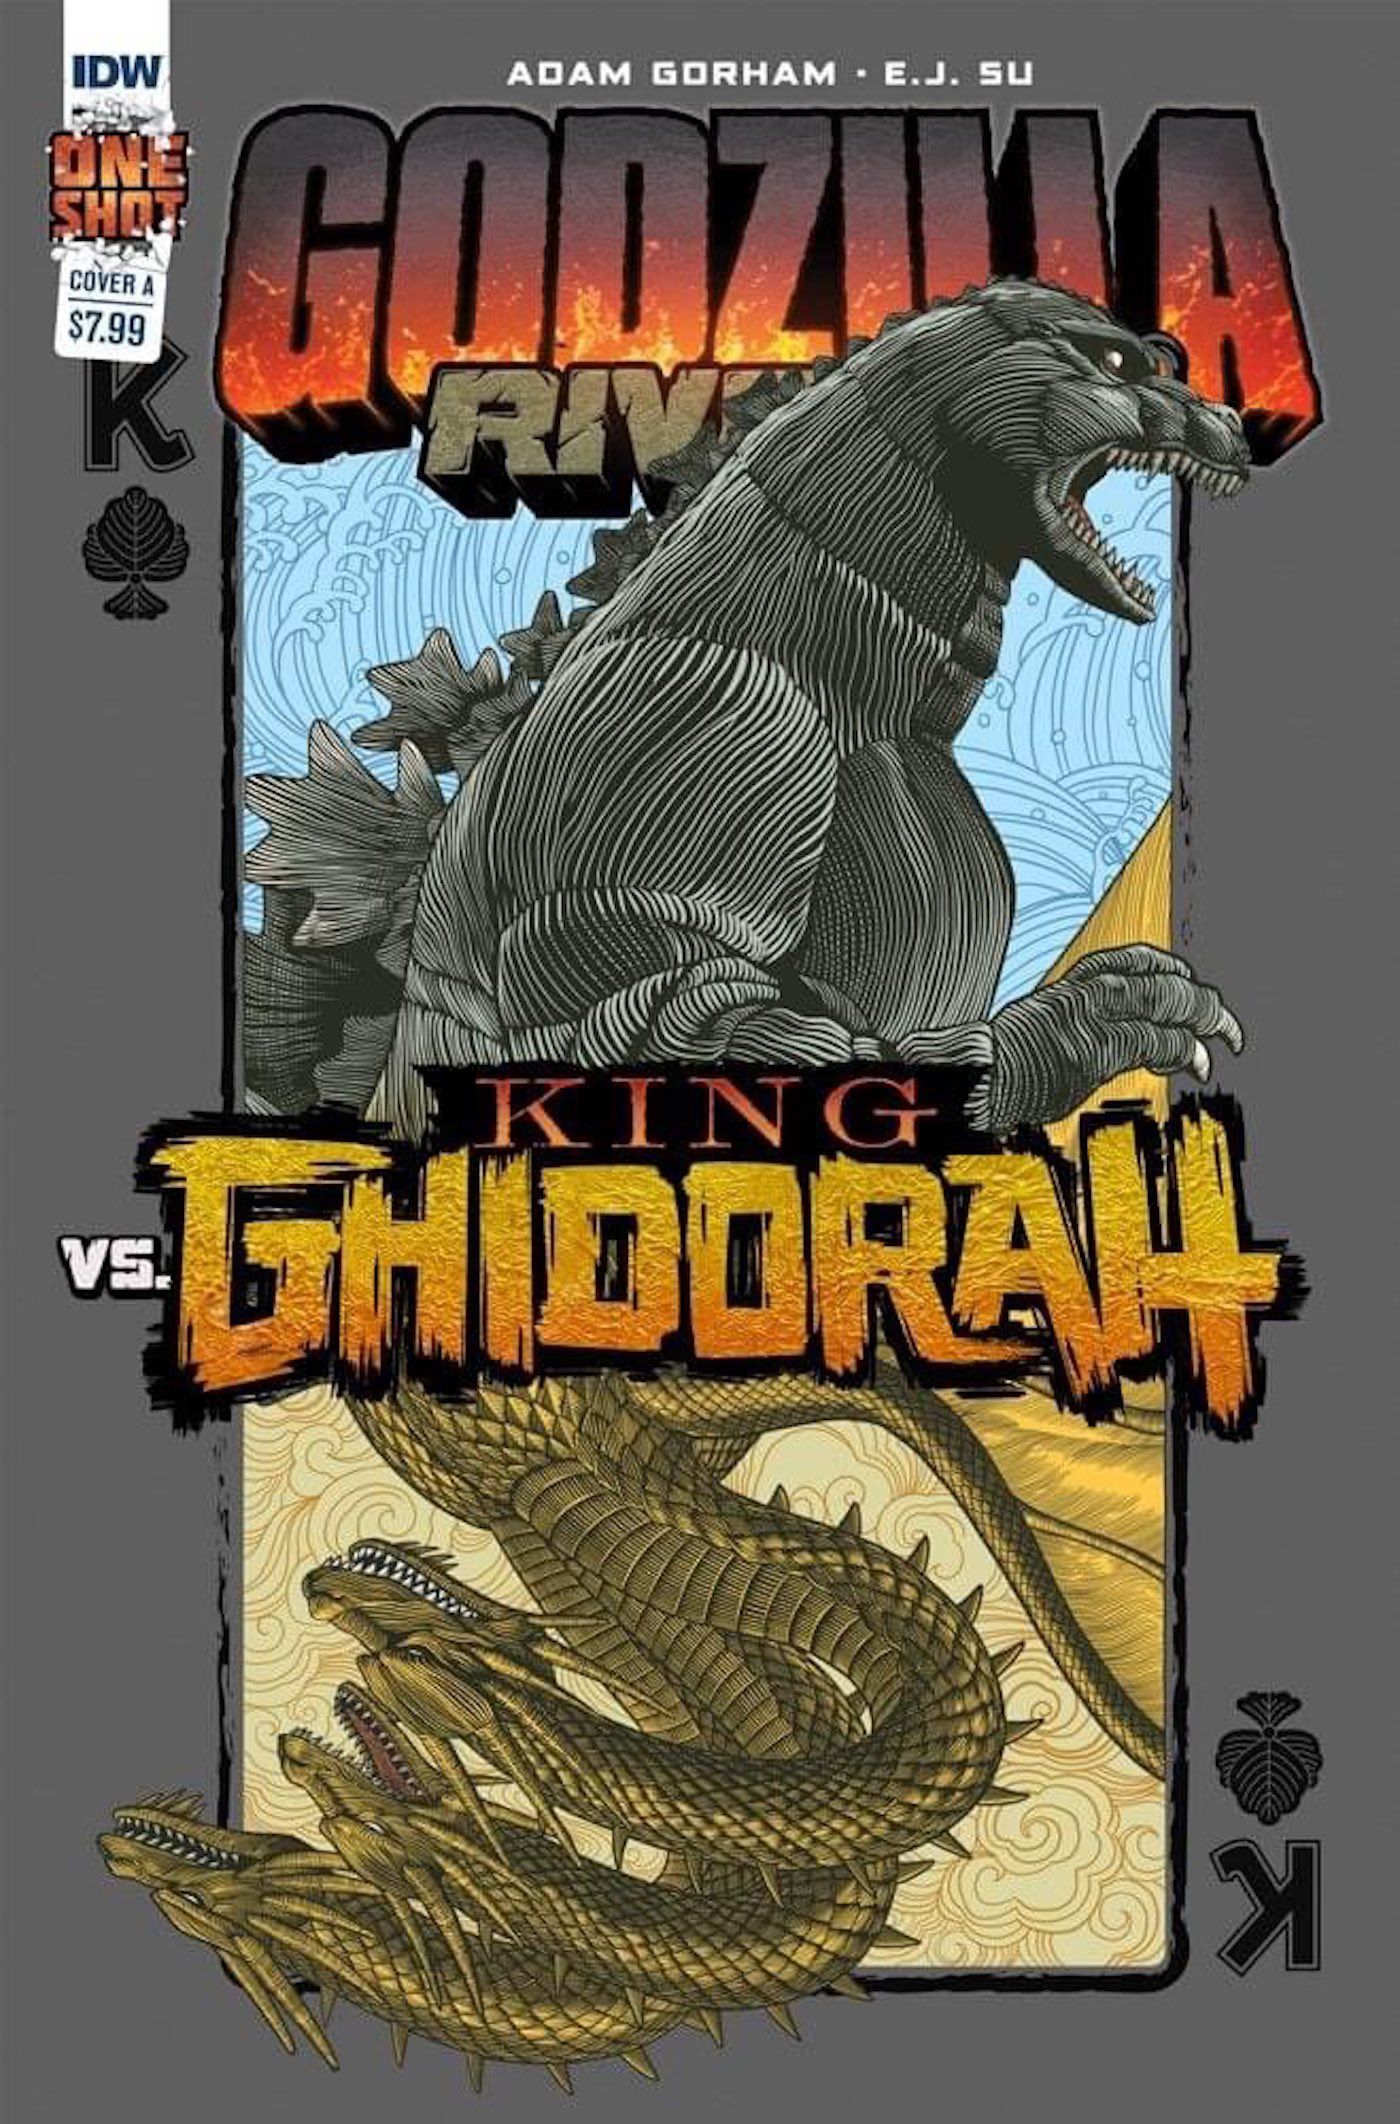 Godzilla Rivals